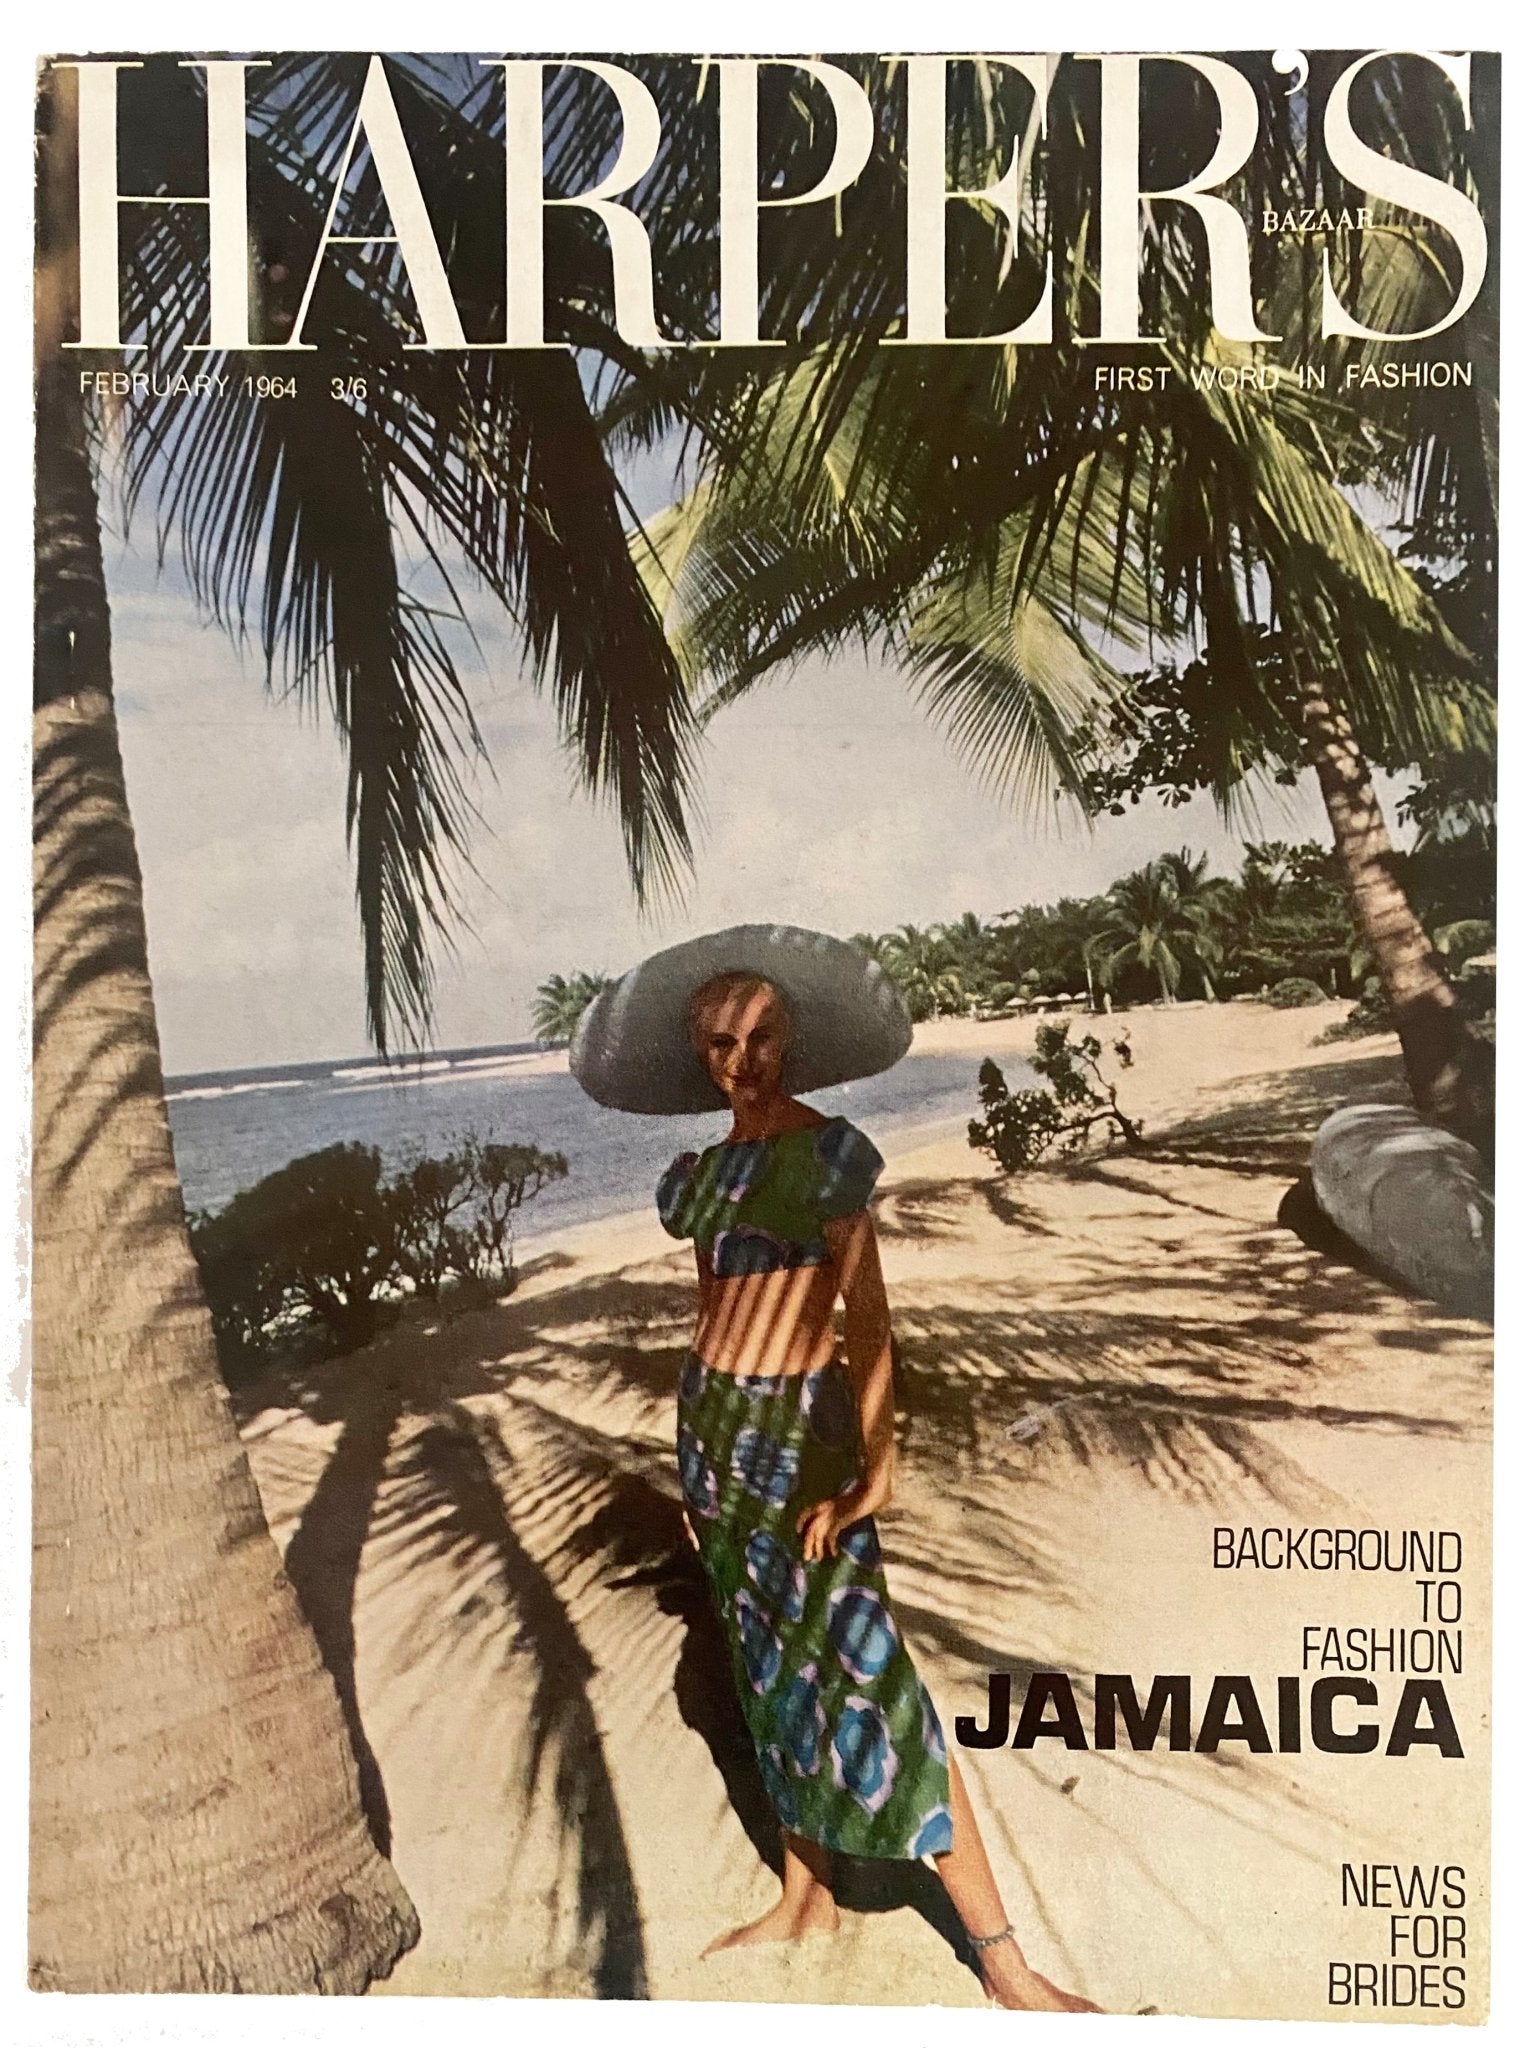 1964 Harper's Bazaar Magazine - "Background to Fashion: Jamaica" - Cover by Richard Dormer - style - CHNGR